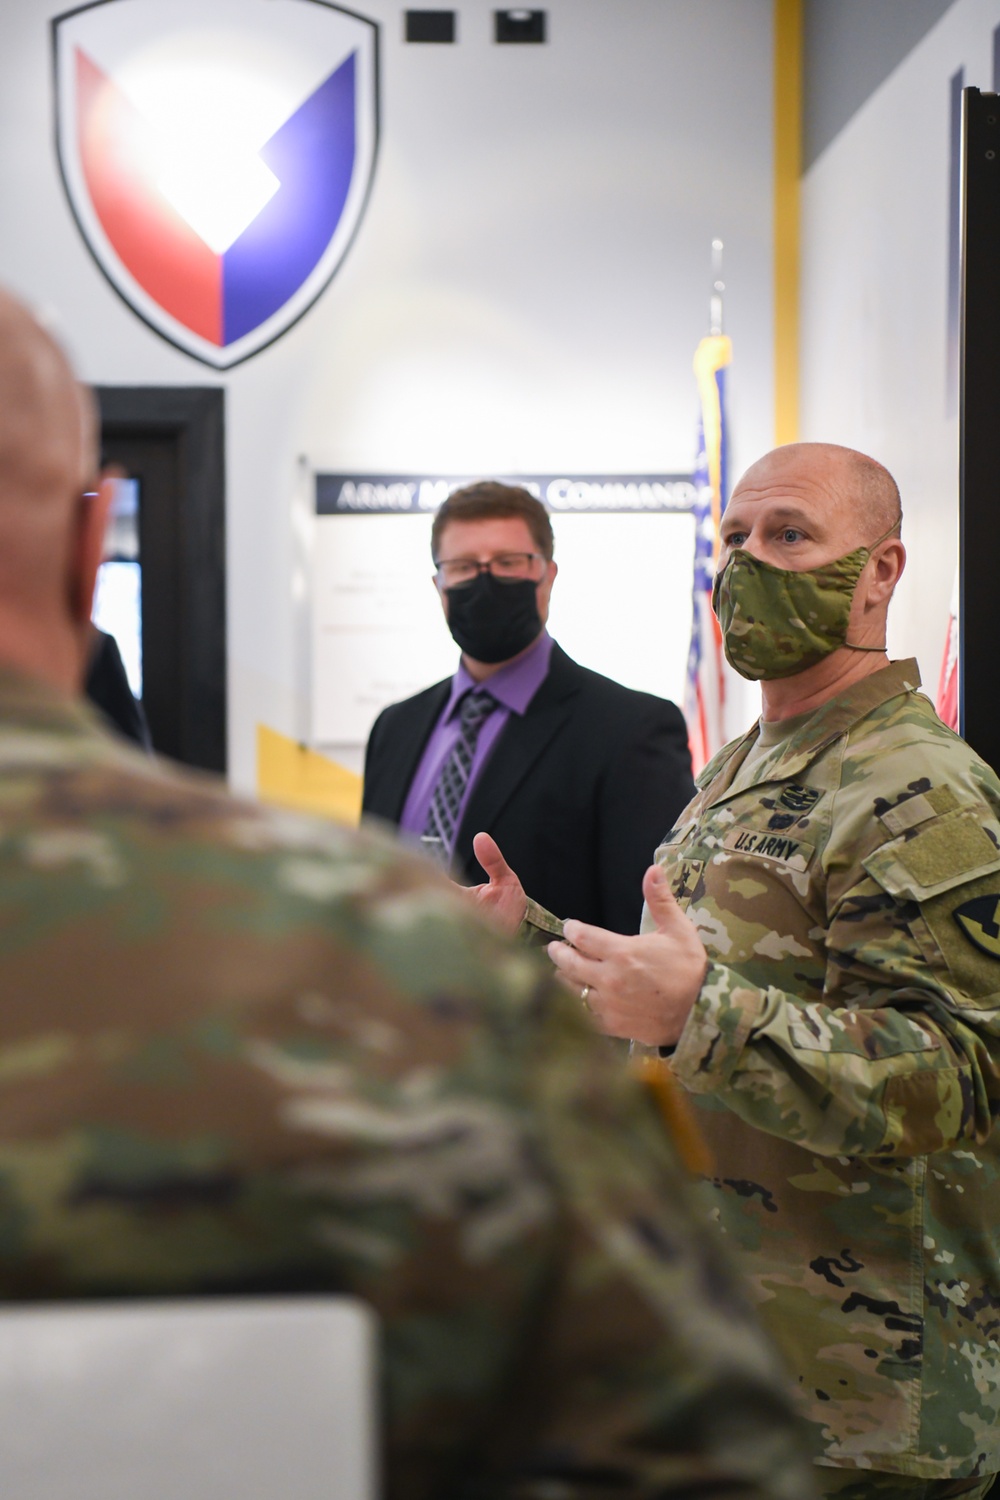 AMC top leader visits Letterkenny Army Depot